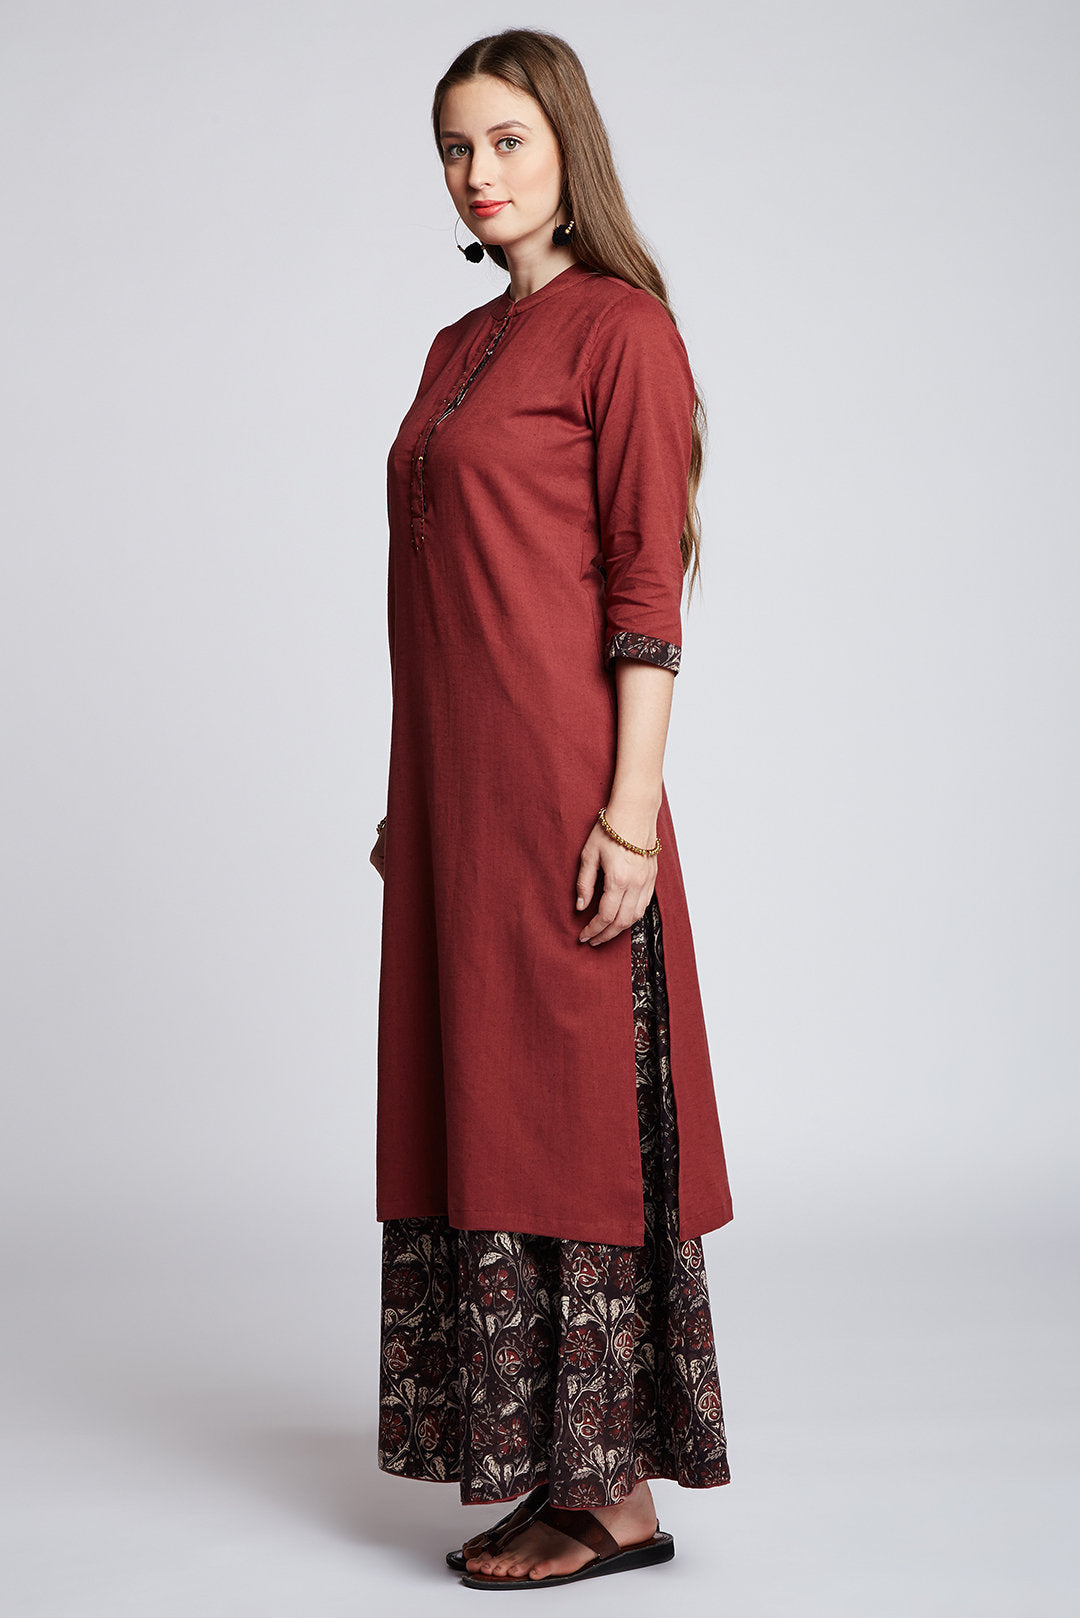 Hand block jahota printed skirt with long plain cotton kurta with kantha hand embroidery